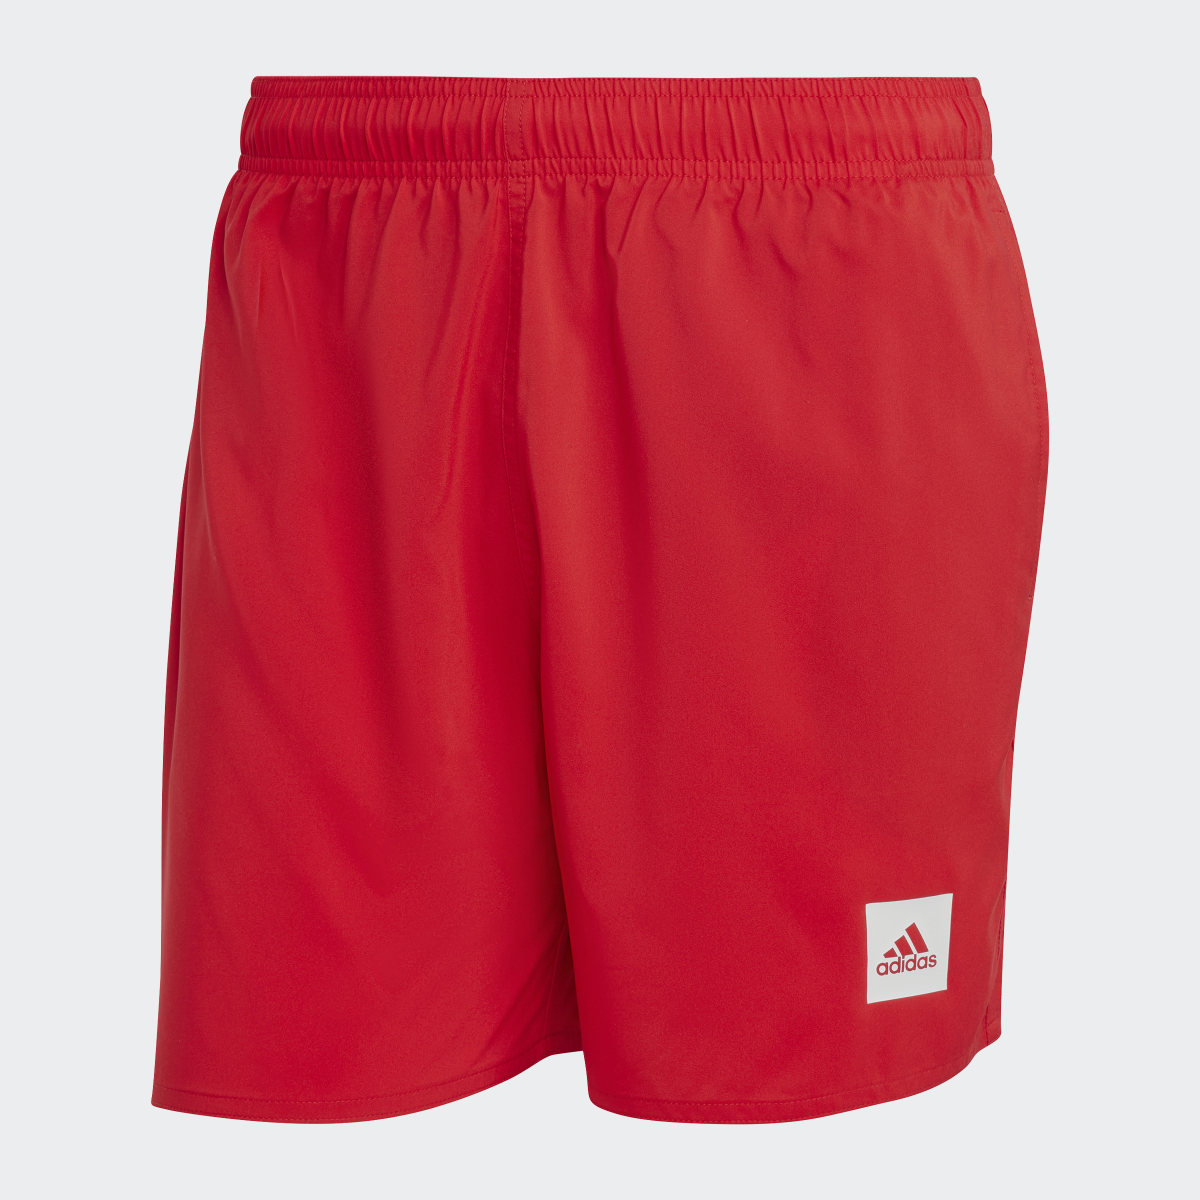 Adidas Short Length Solid Swim Shorts. 5